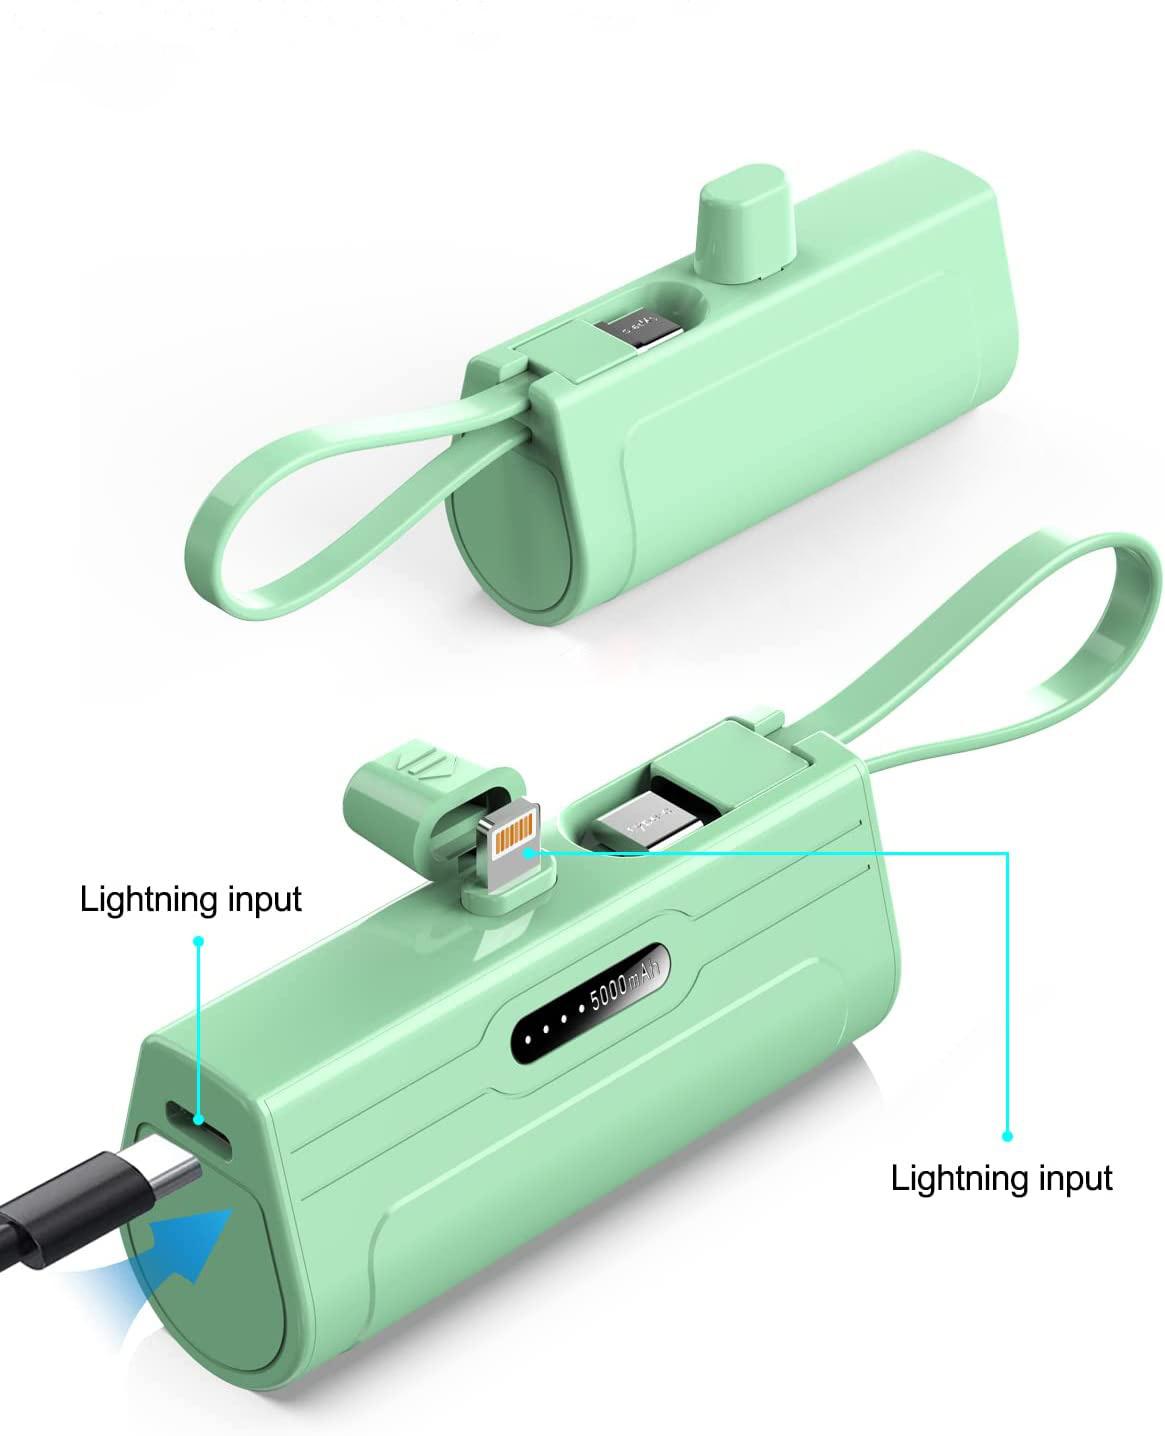 Green portable 5000mAh power bank with Lightning input